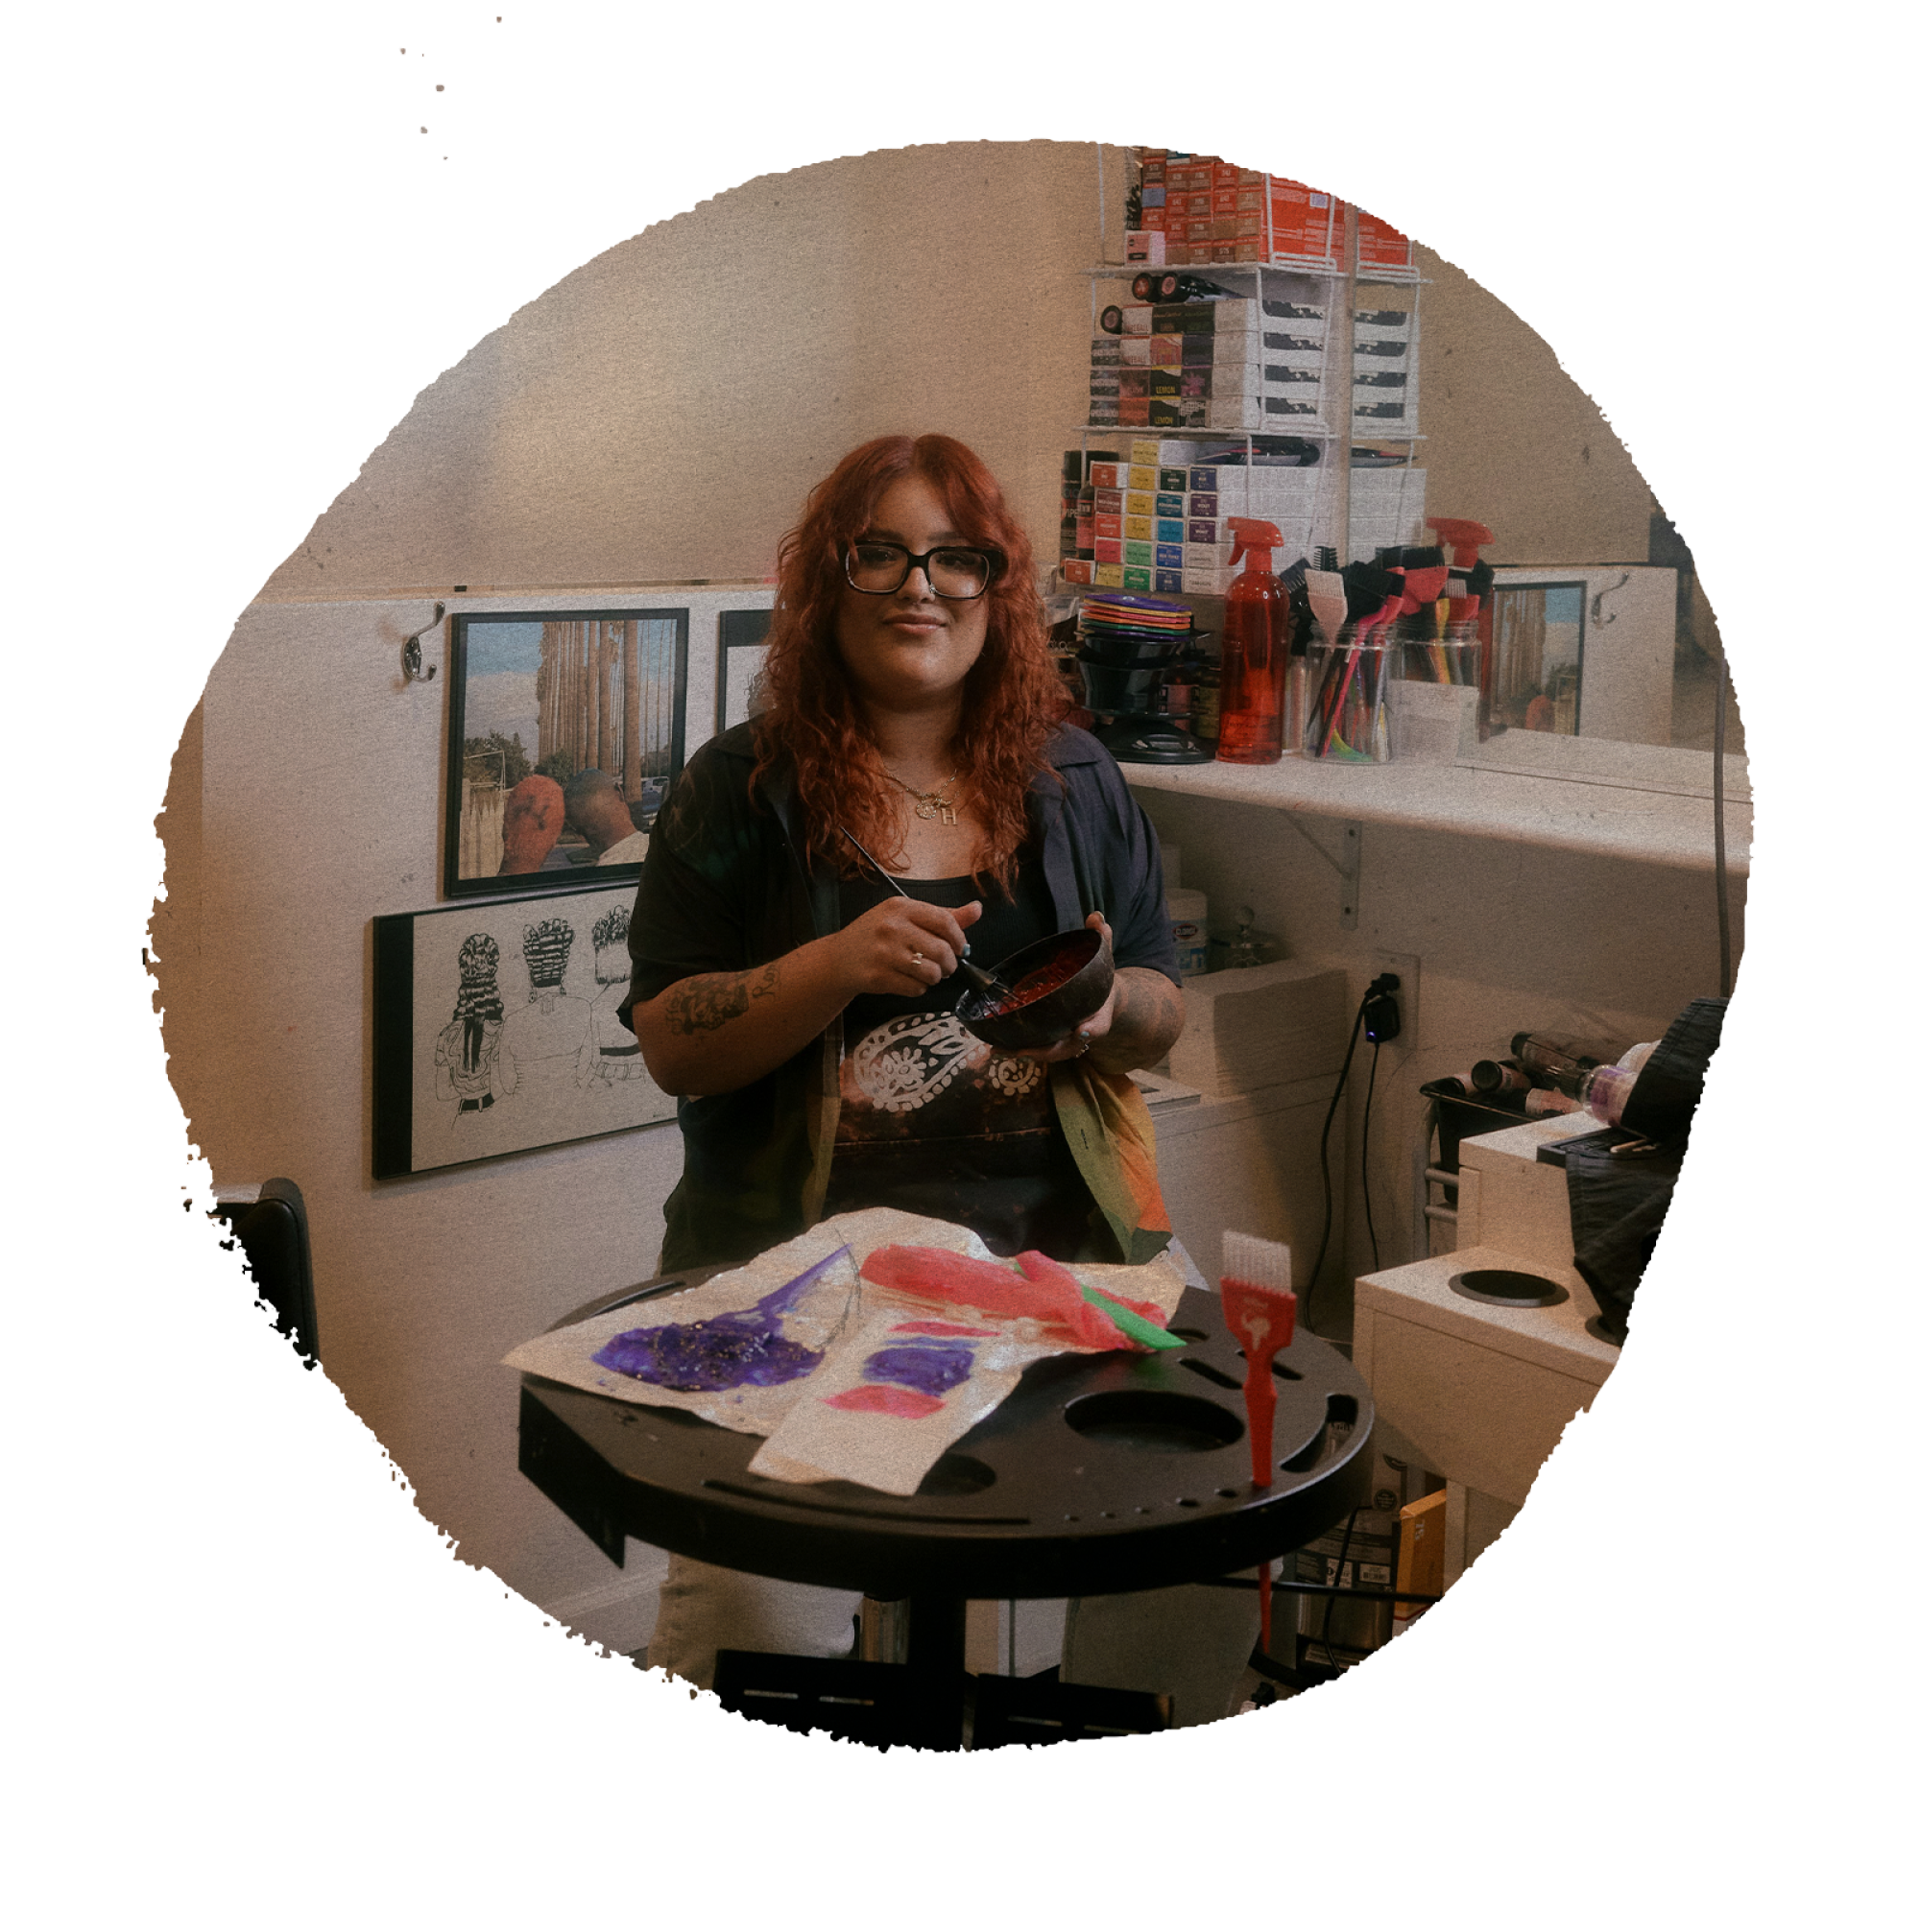 circular photo of hair artist Brenda Huerta (a.k.a. @c0mptonkitty) at her station mixing hair dye